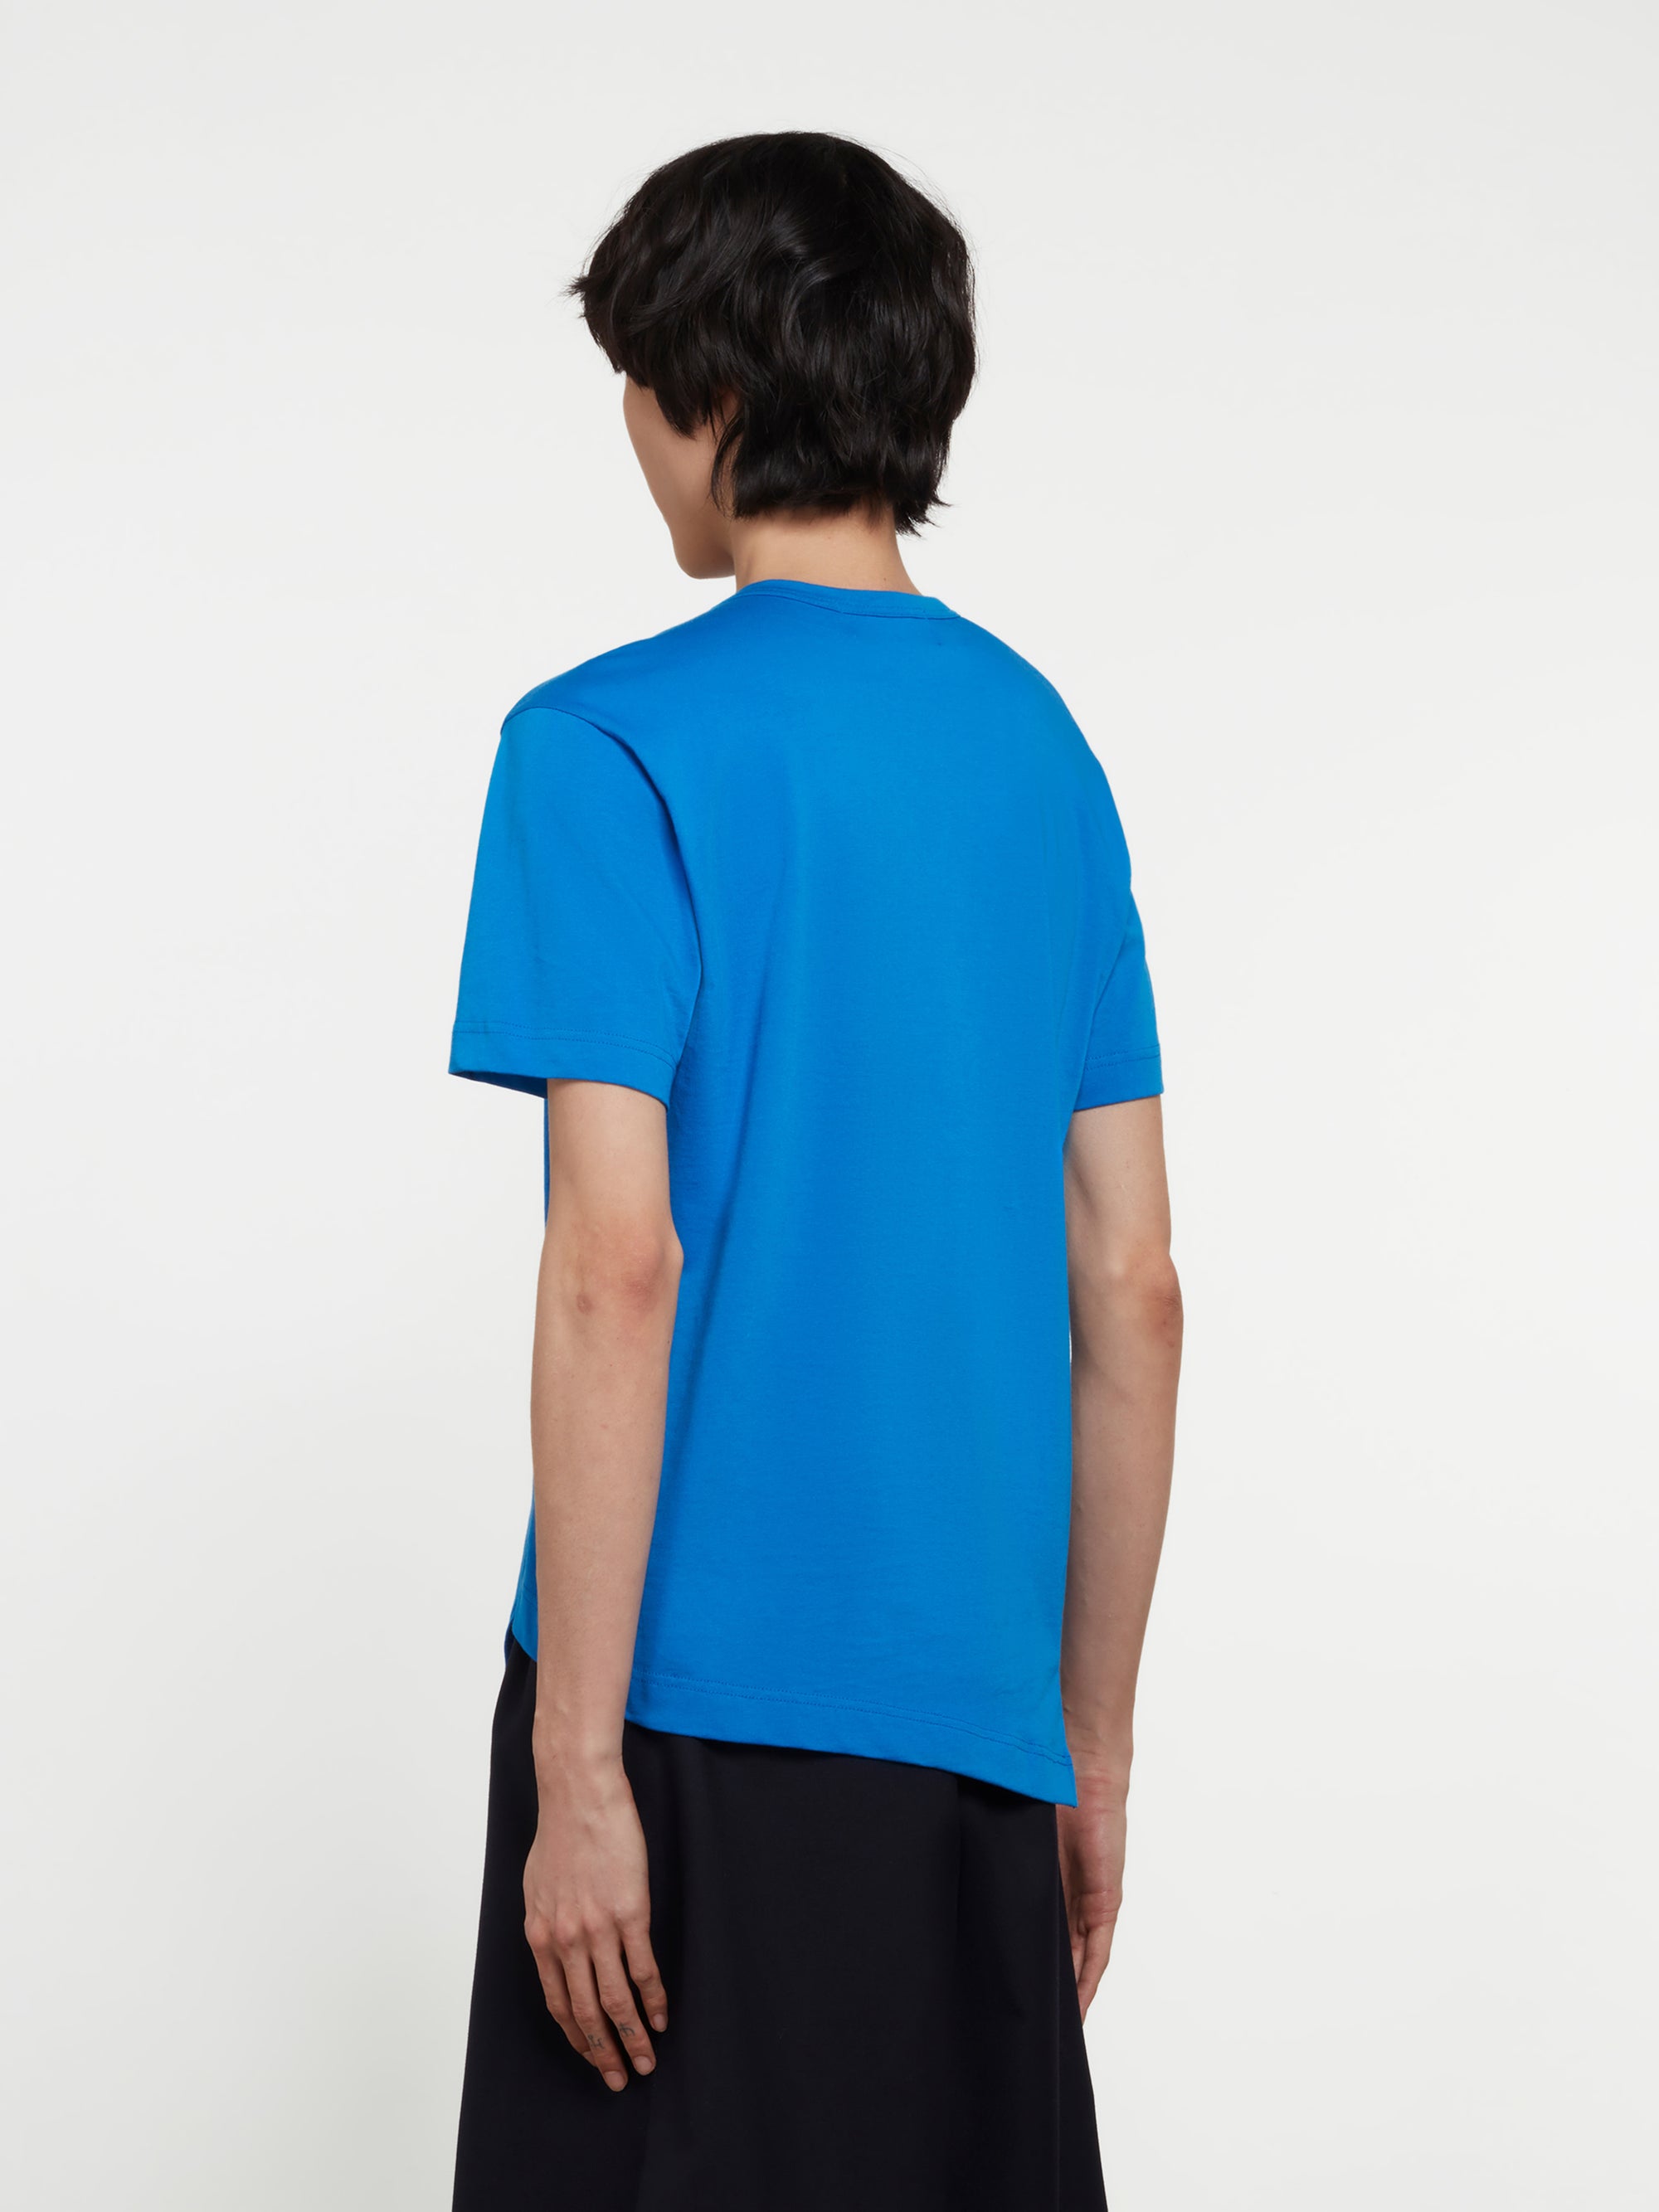 CDG Shirt - Lacoste Men’s T-Shirt - (Blue) view 3